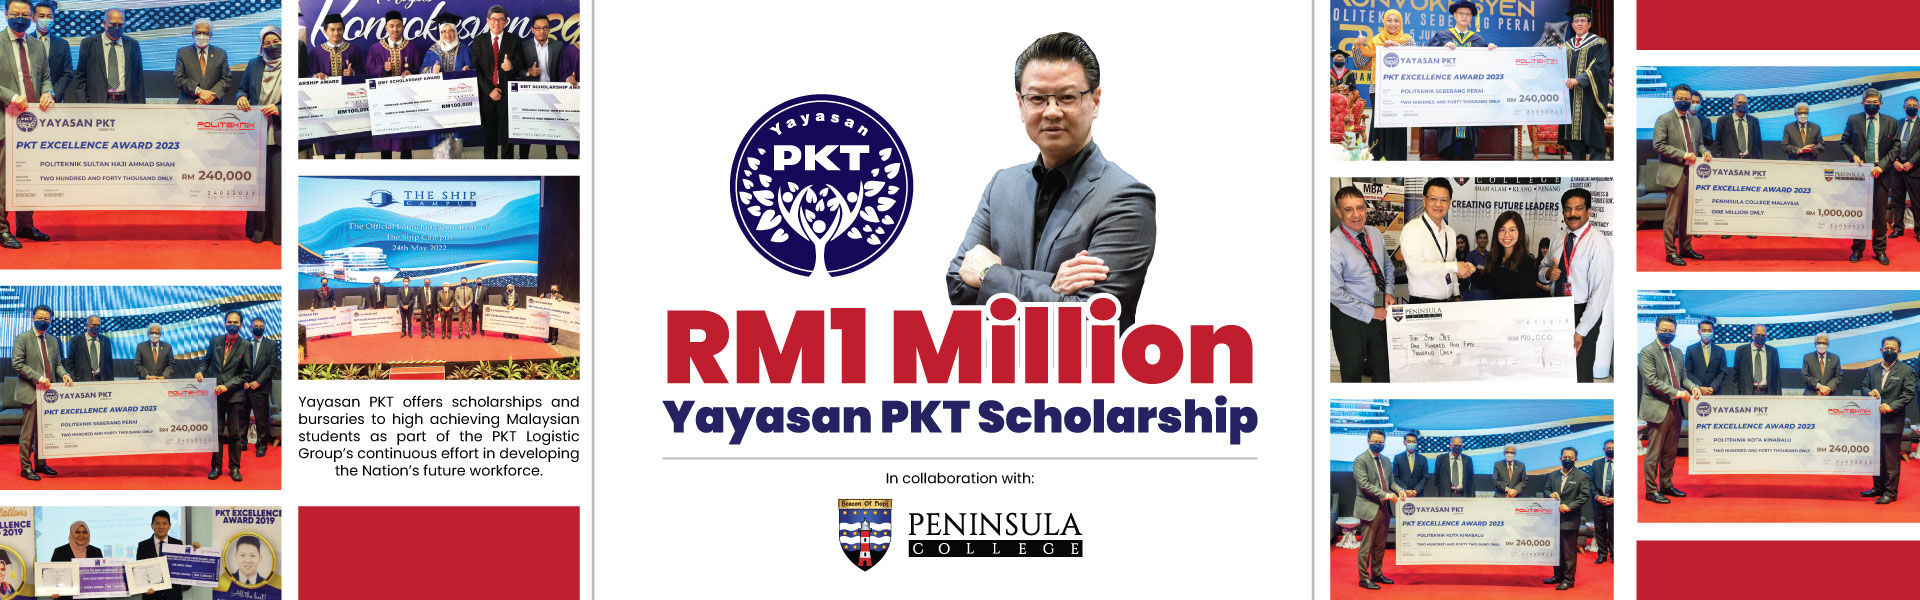 Yayasan PKT Scholarship Awards for Undergraduate Studies